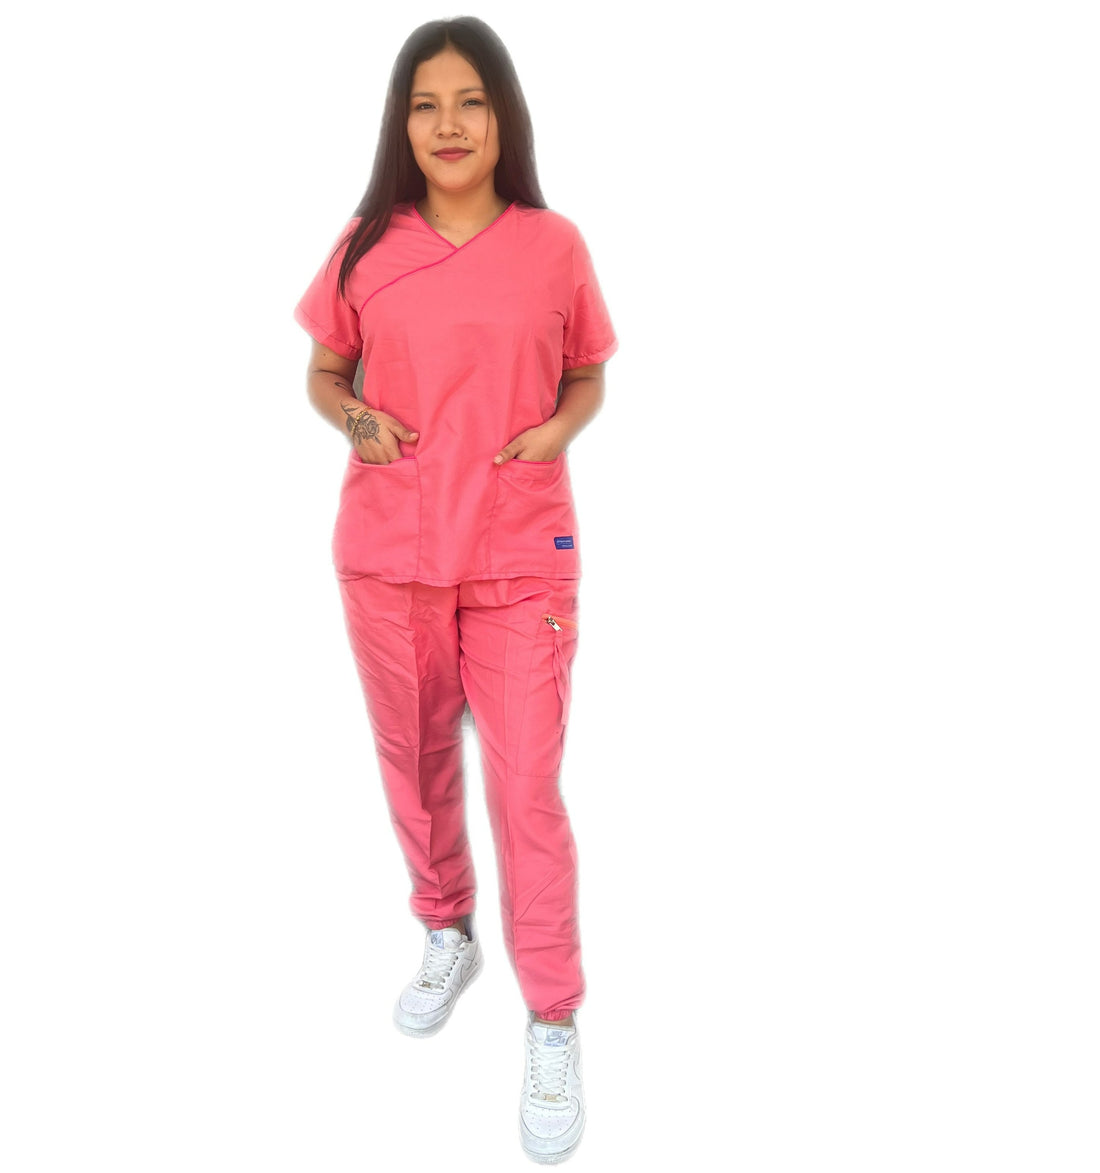 Pijama quirurgica coral San José para mujer repelente spandex uniformes Stanford